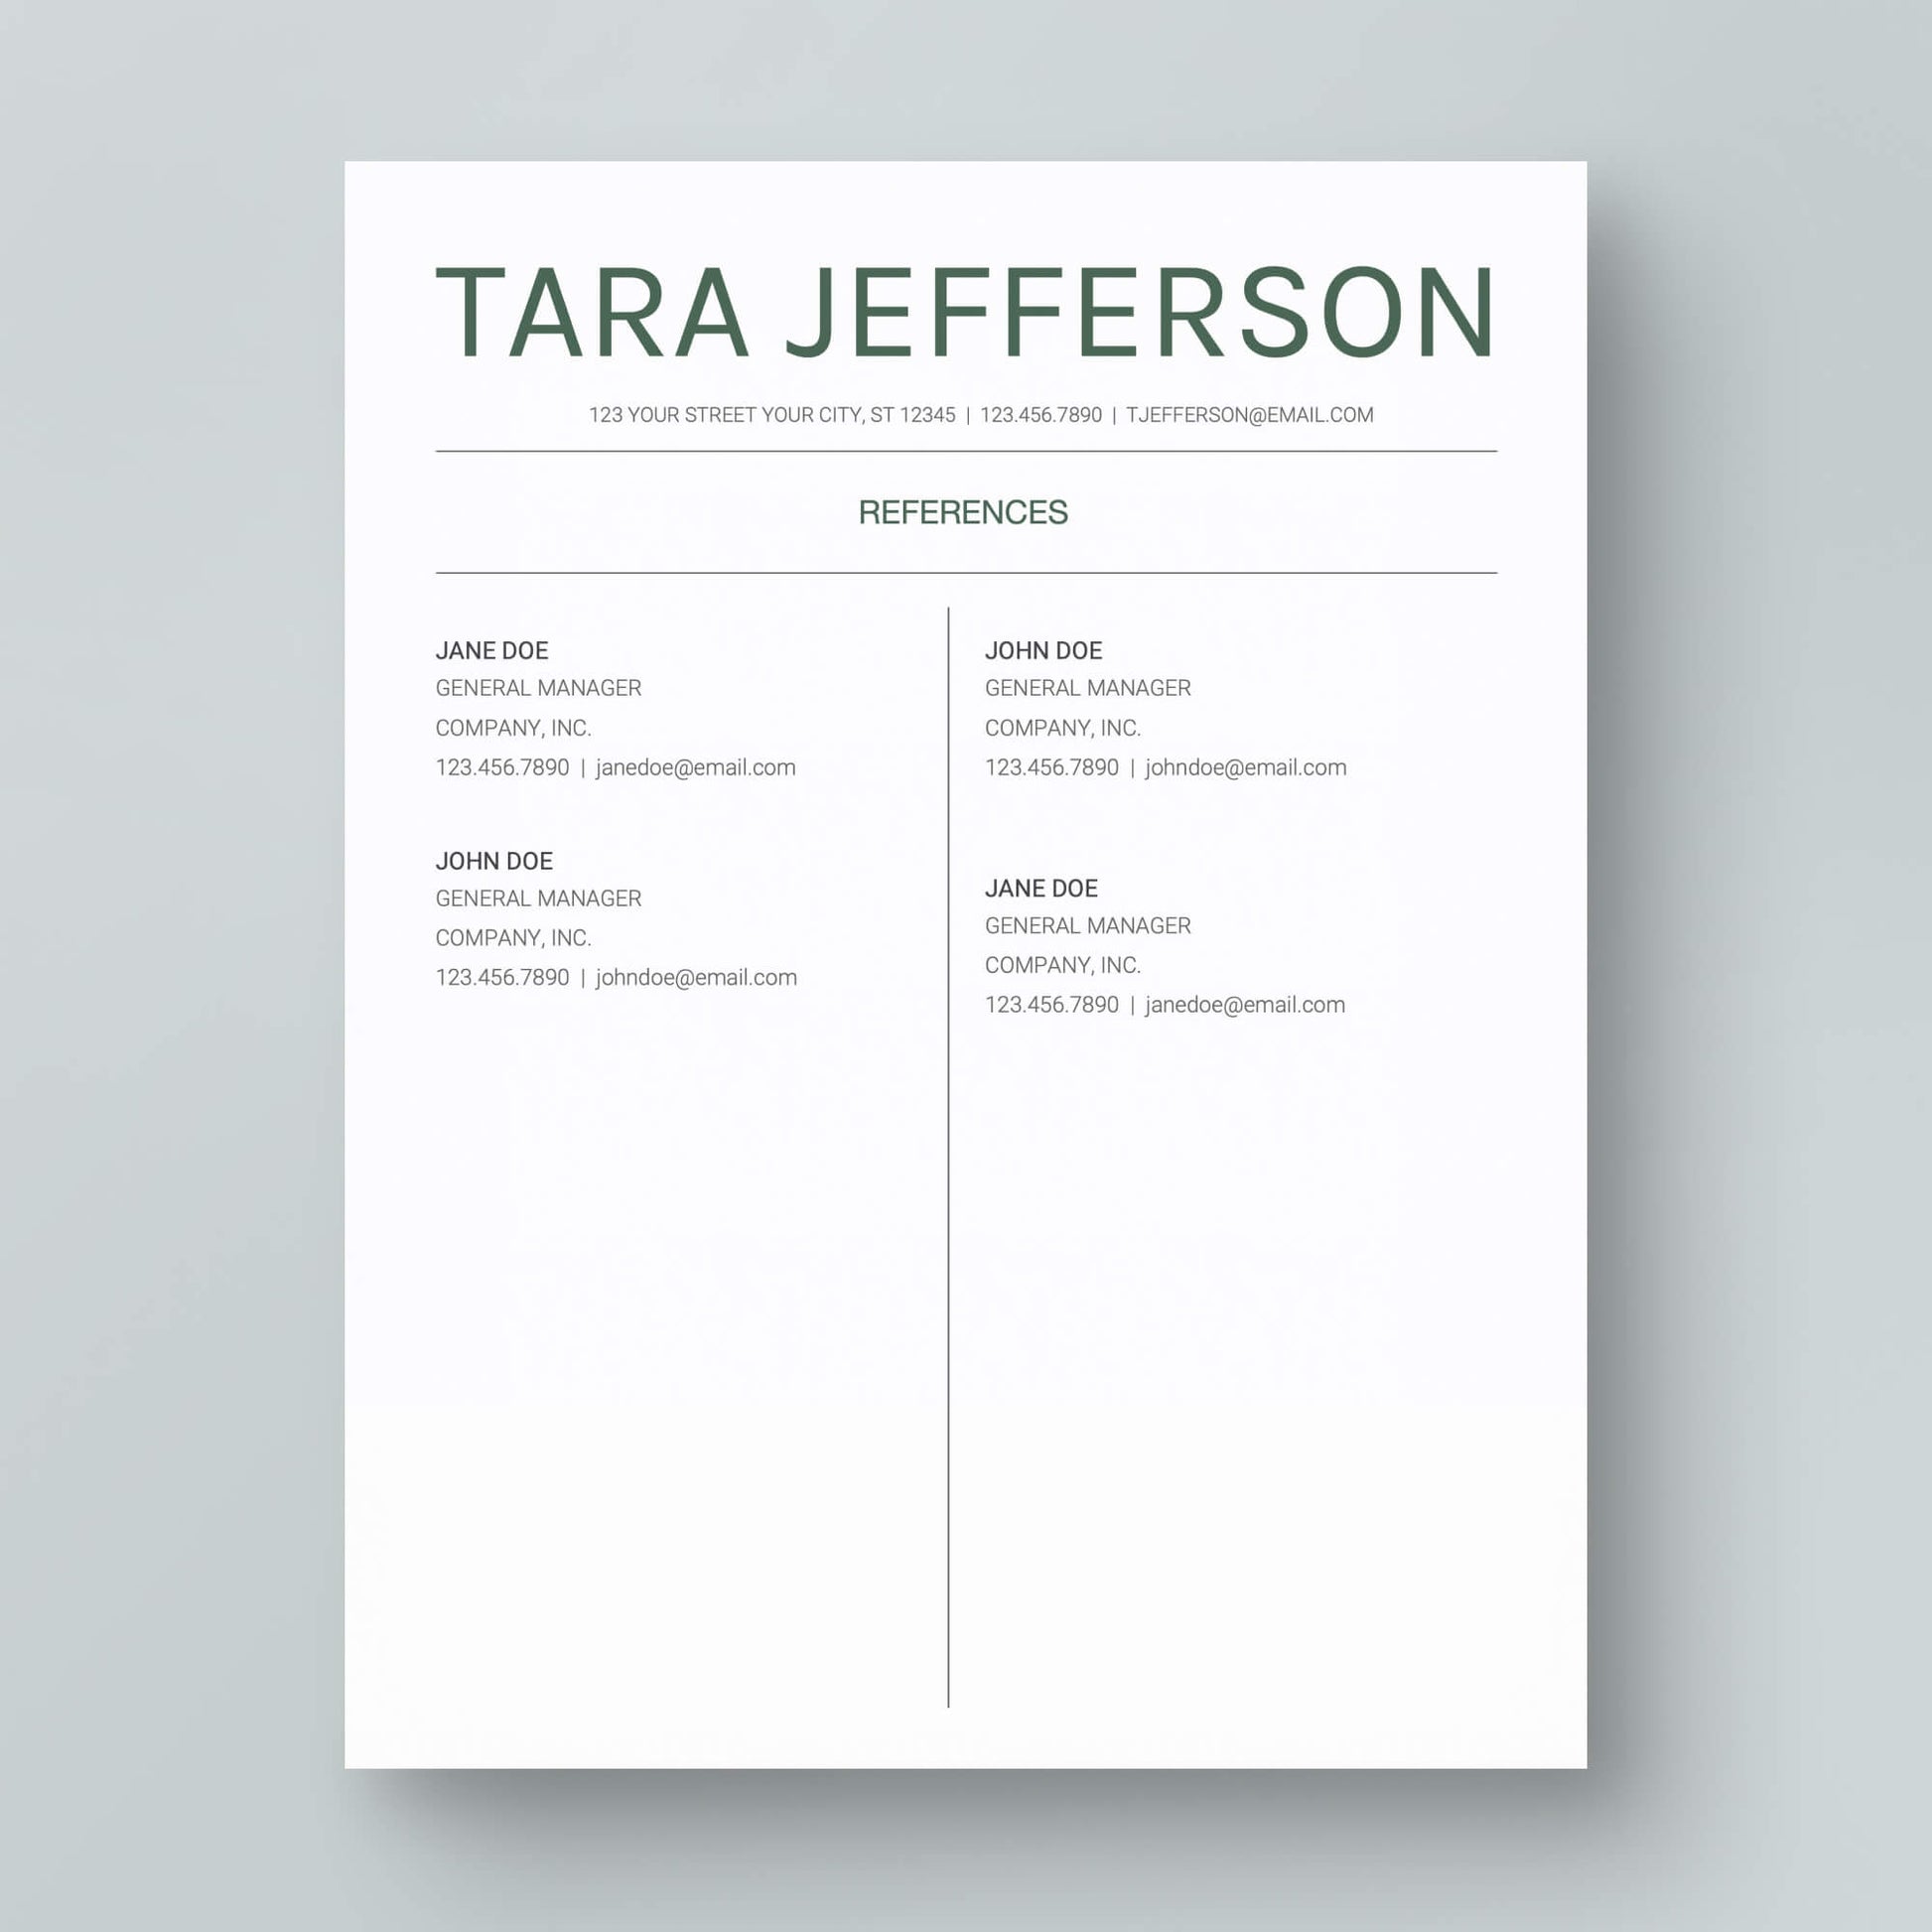 Resume Template: Tara Jefferson - MioDocs